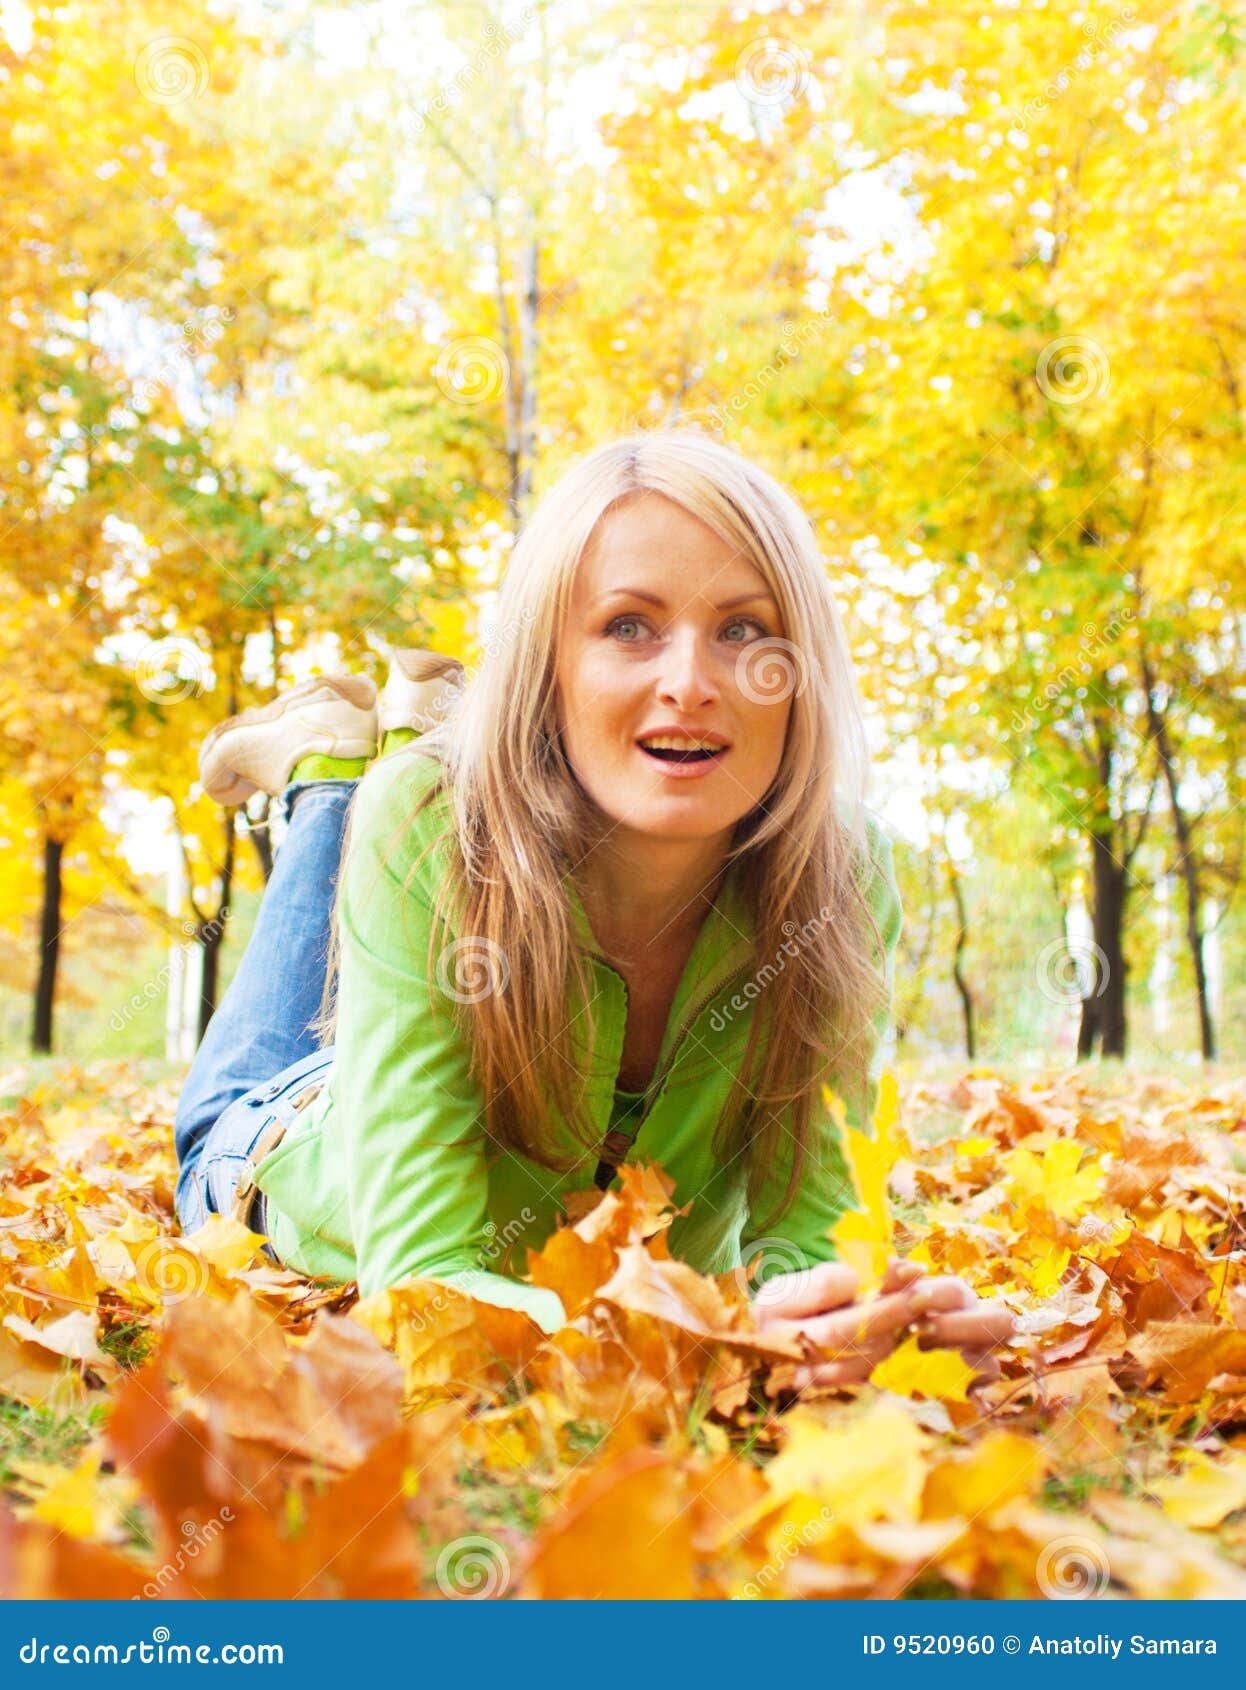 Girl on autumn leaves stock photo. Image of golden, green - 9520960